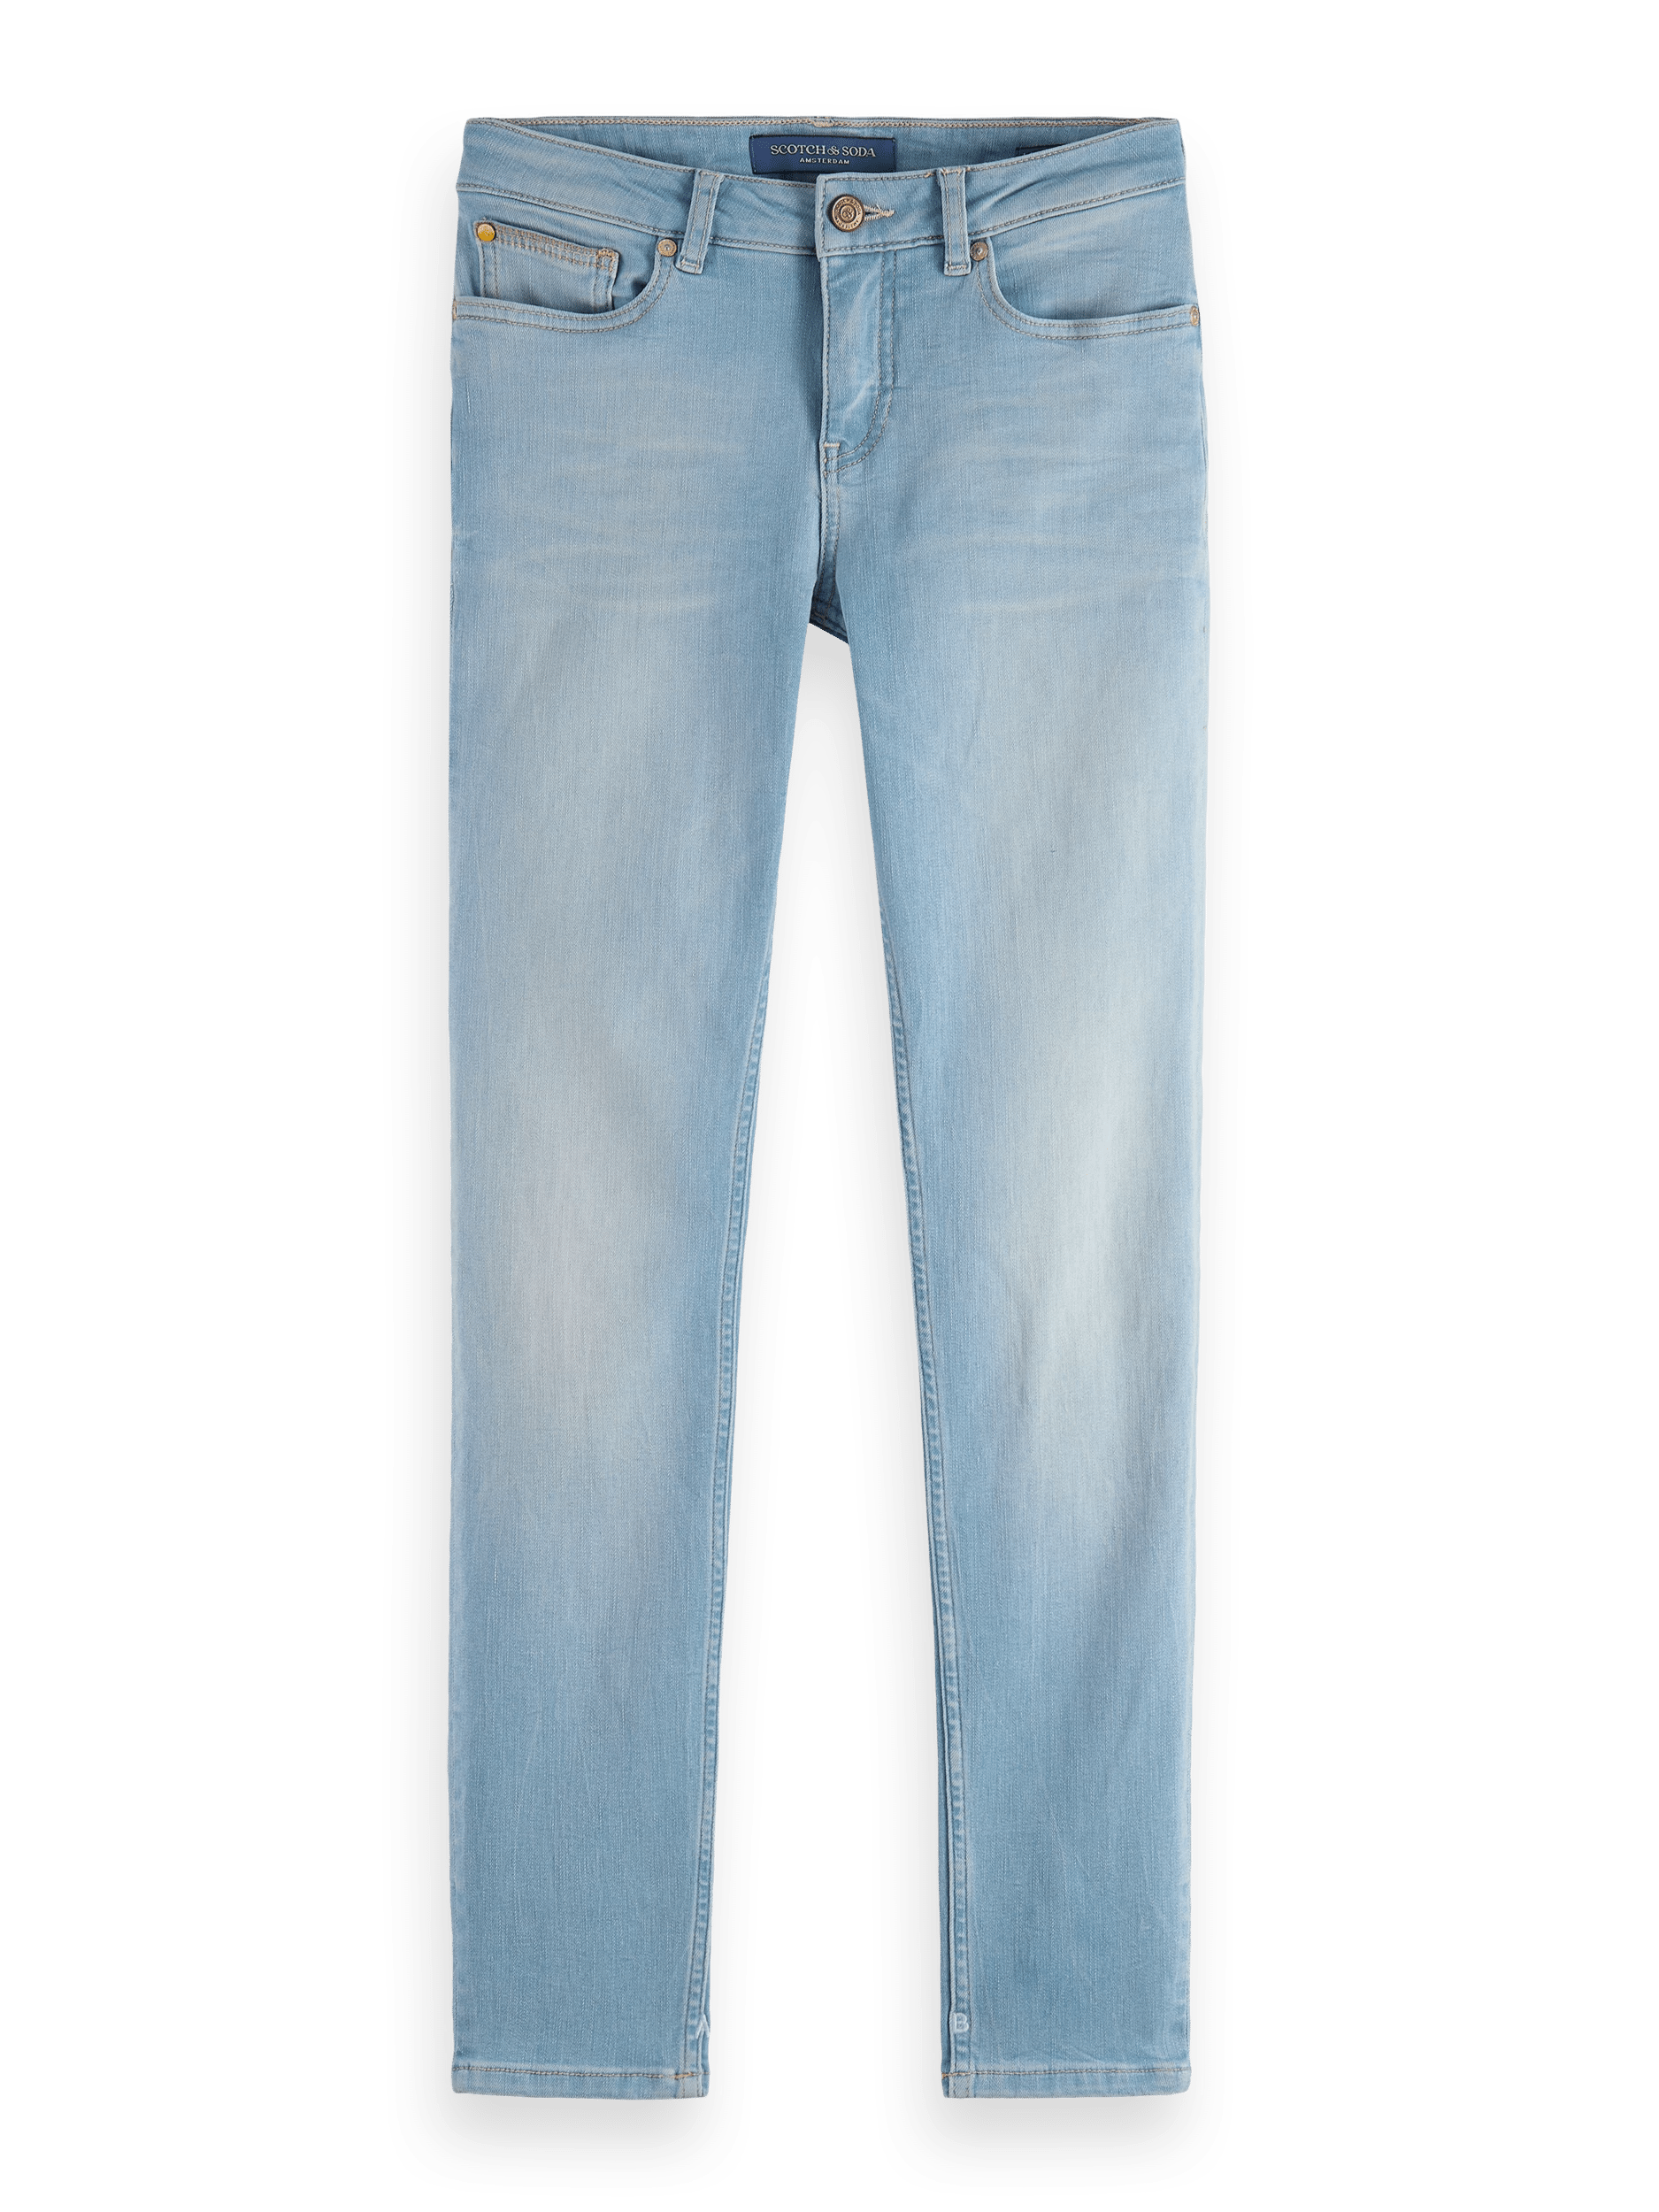 Scotch & Soda La Bohemienne mid-rise skinny jeans FNT